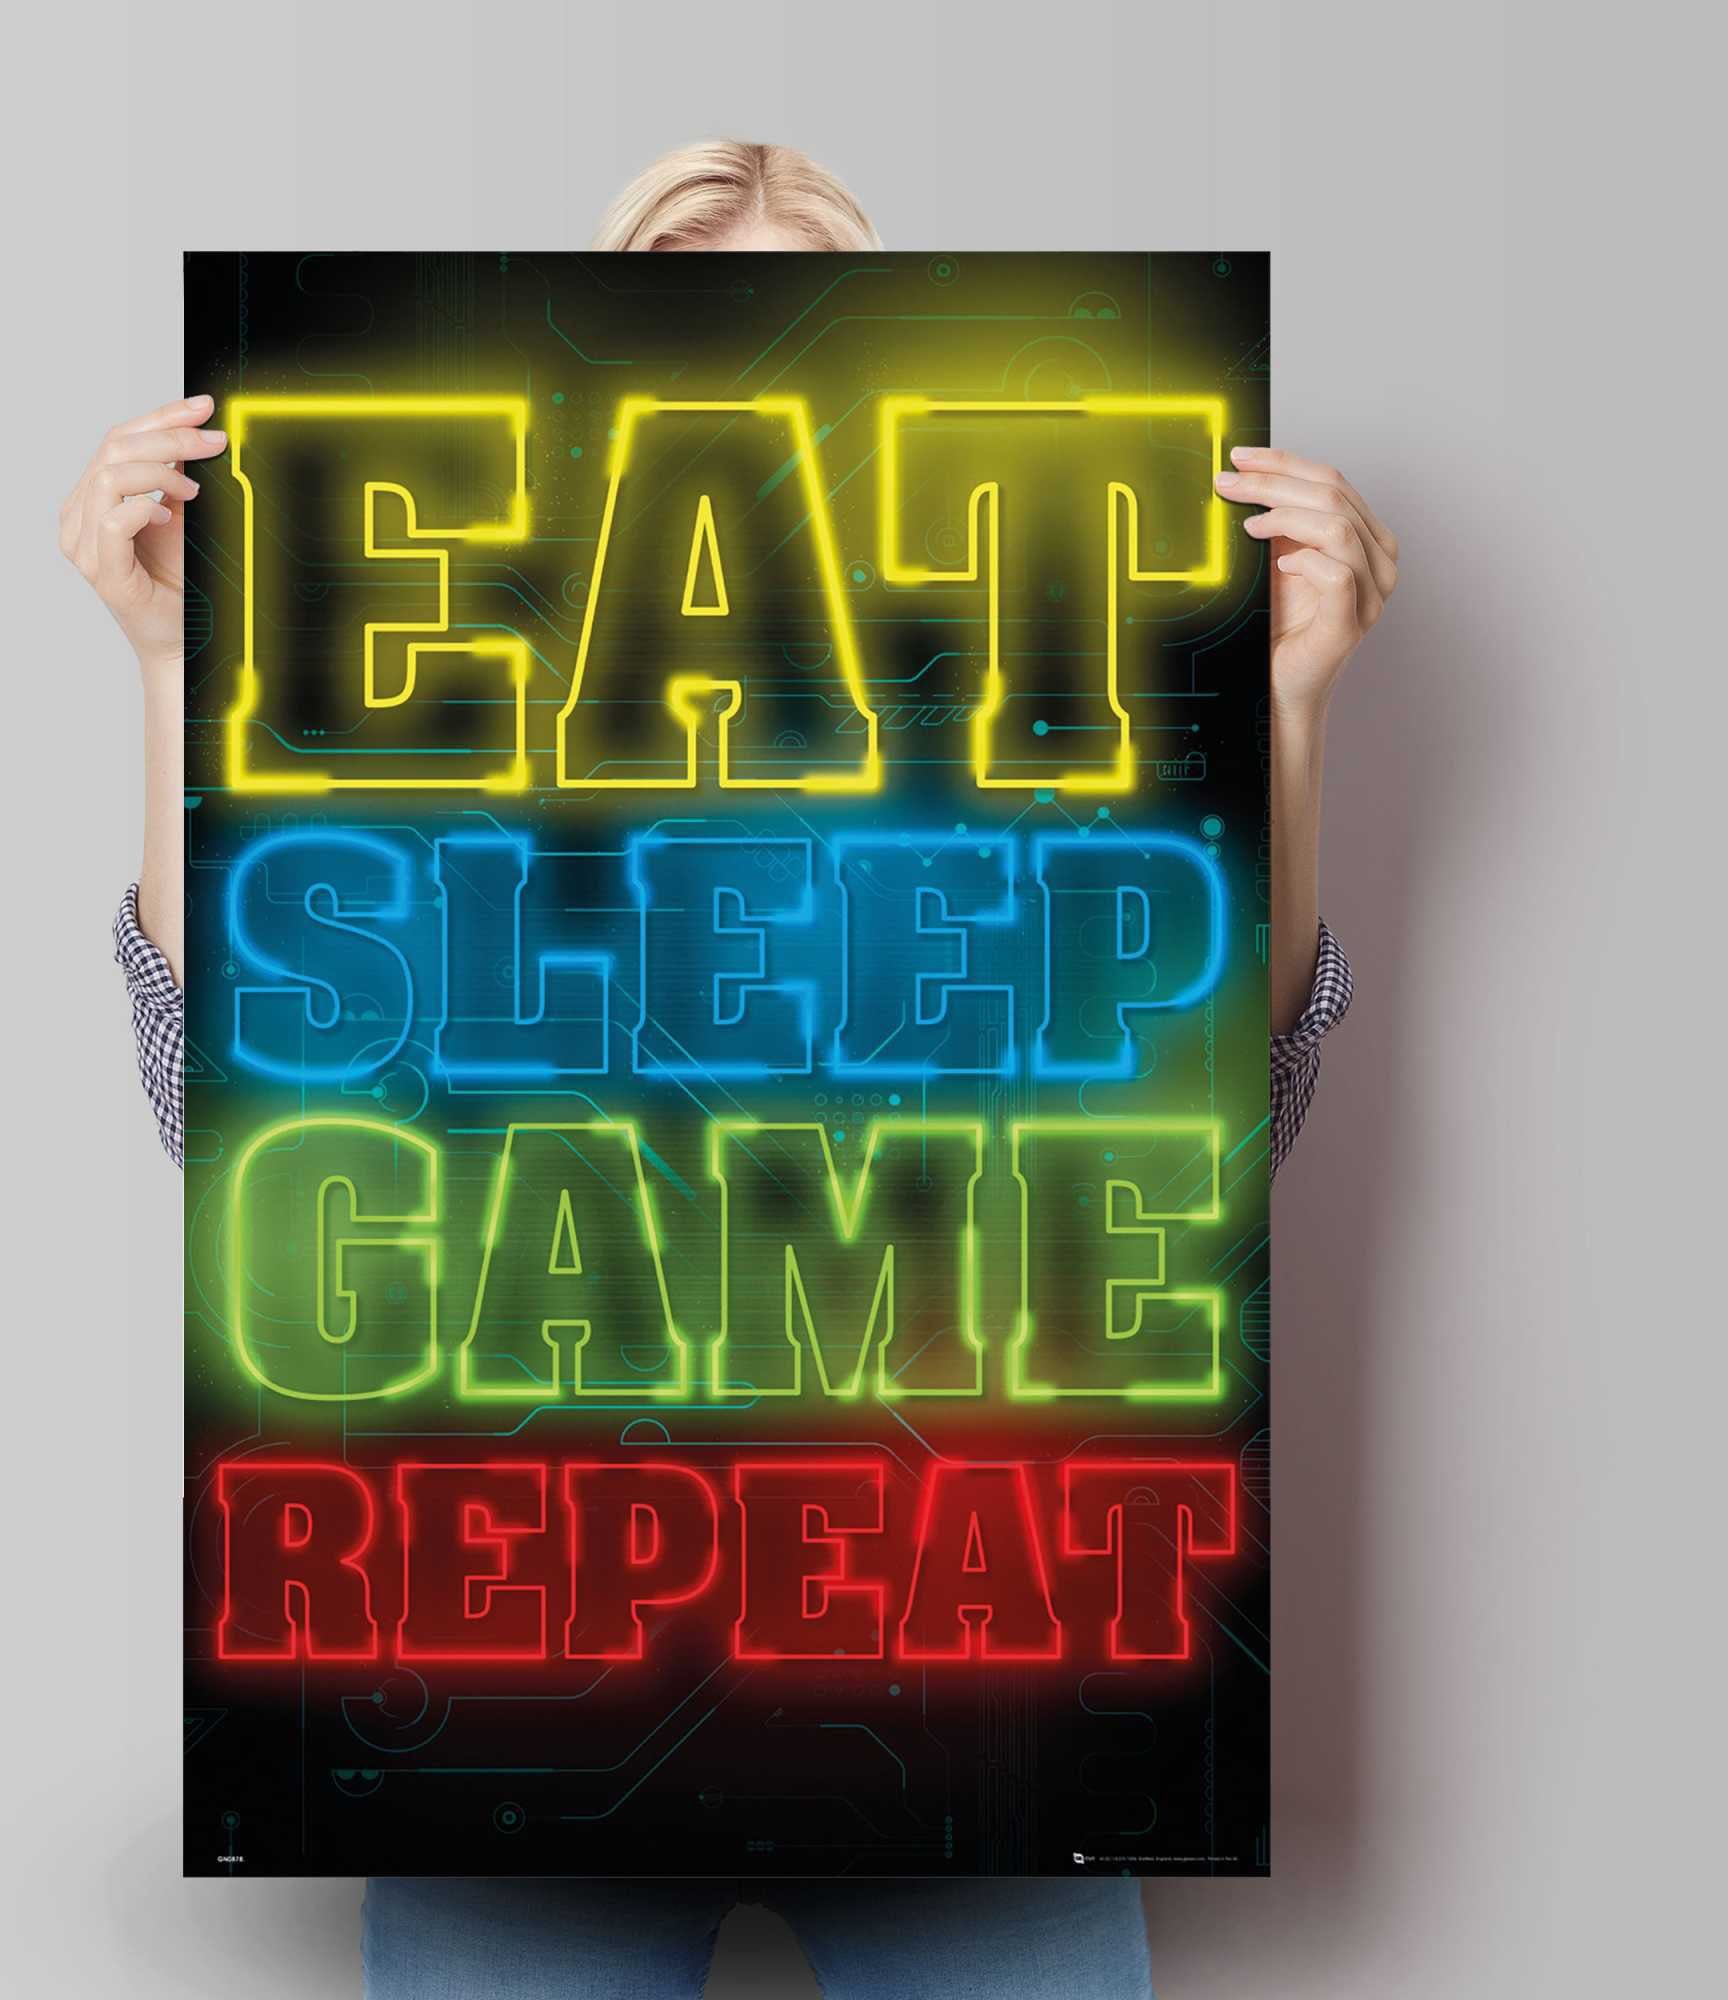 sleep game repeat, Eat (1 St) Reinders! Poster Spiele Zocken Poster